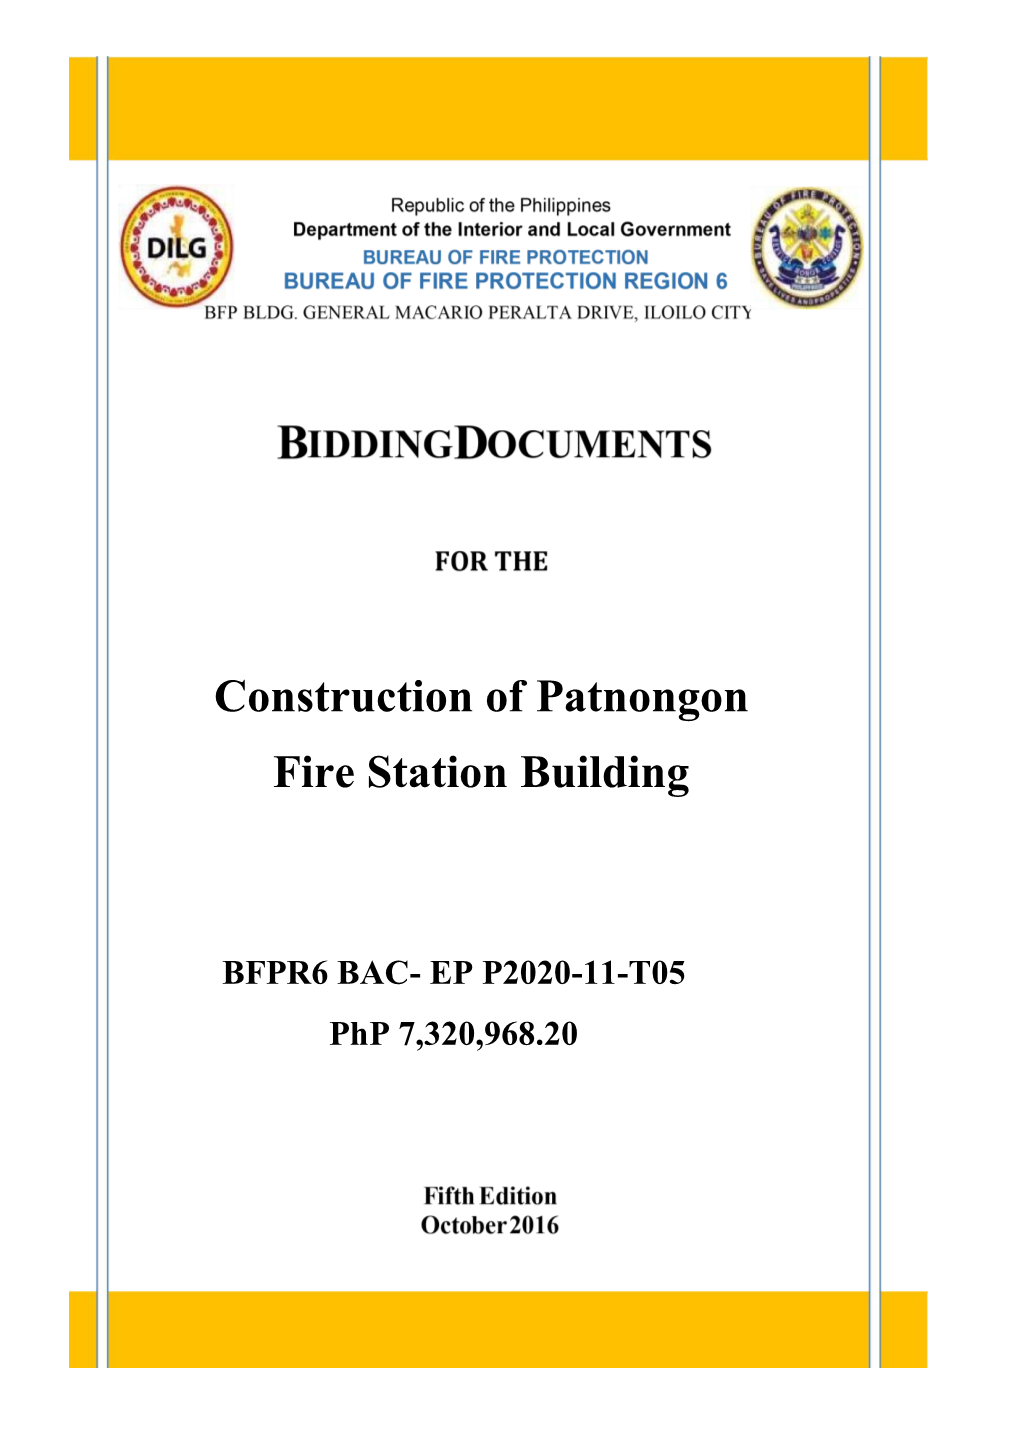 Construction of Patnongon Fire Station Building